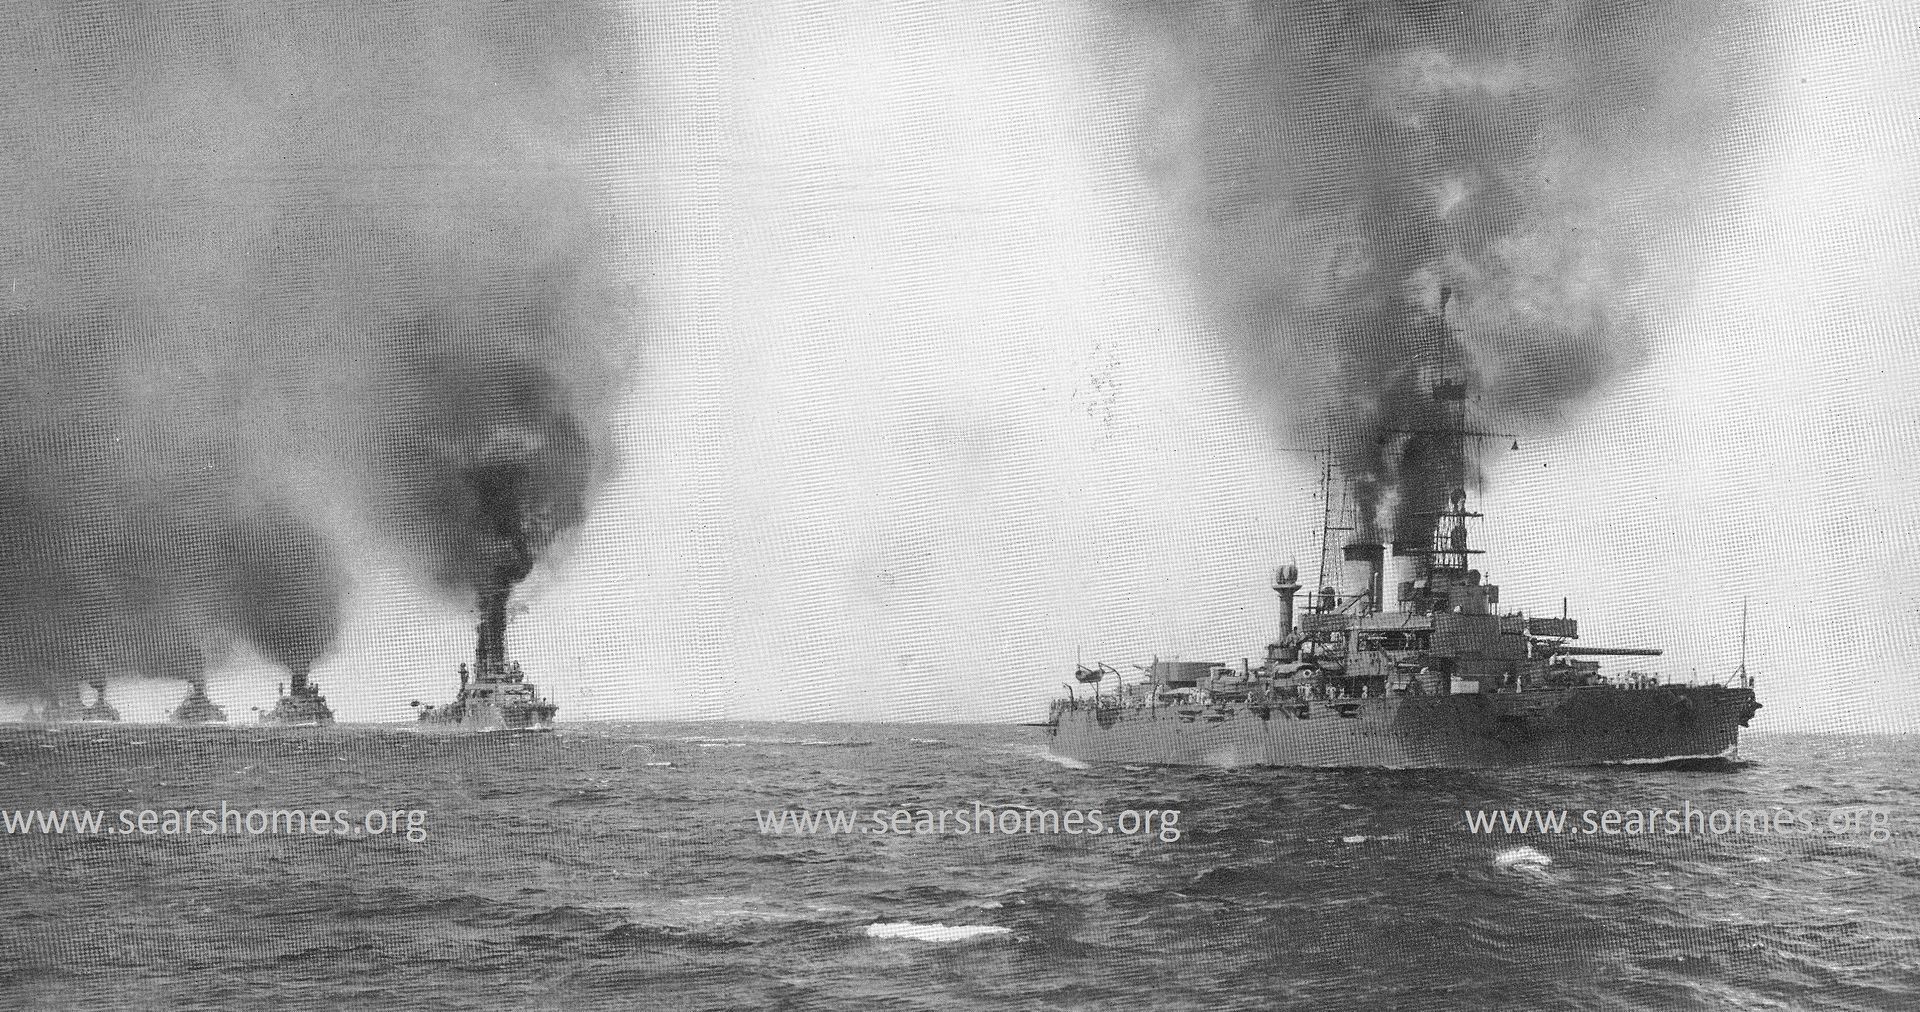 Heres a picture of the Great Atlantic Fleet underway (1917).